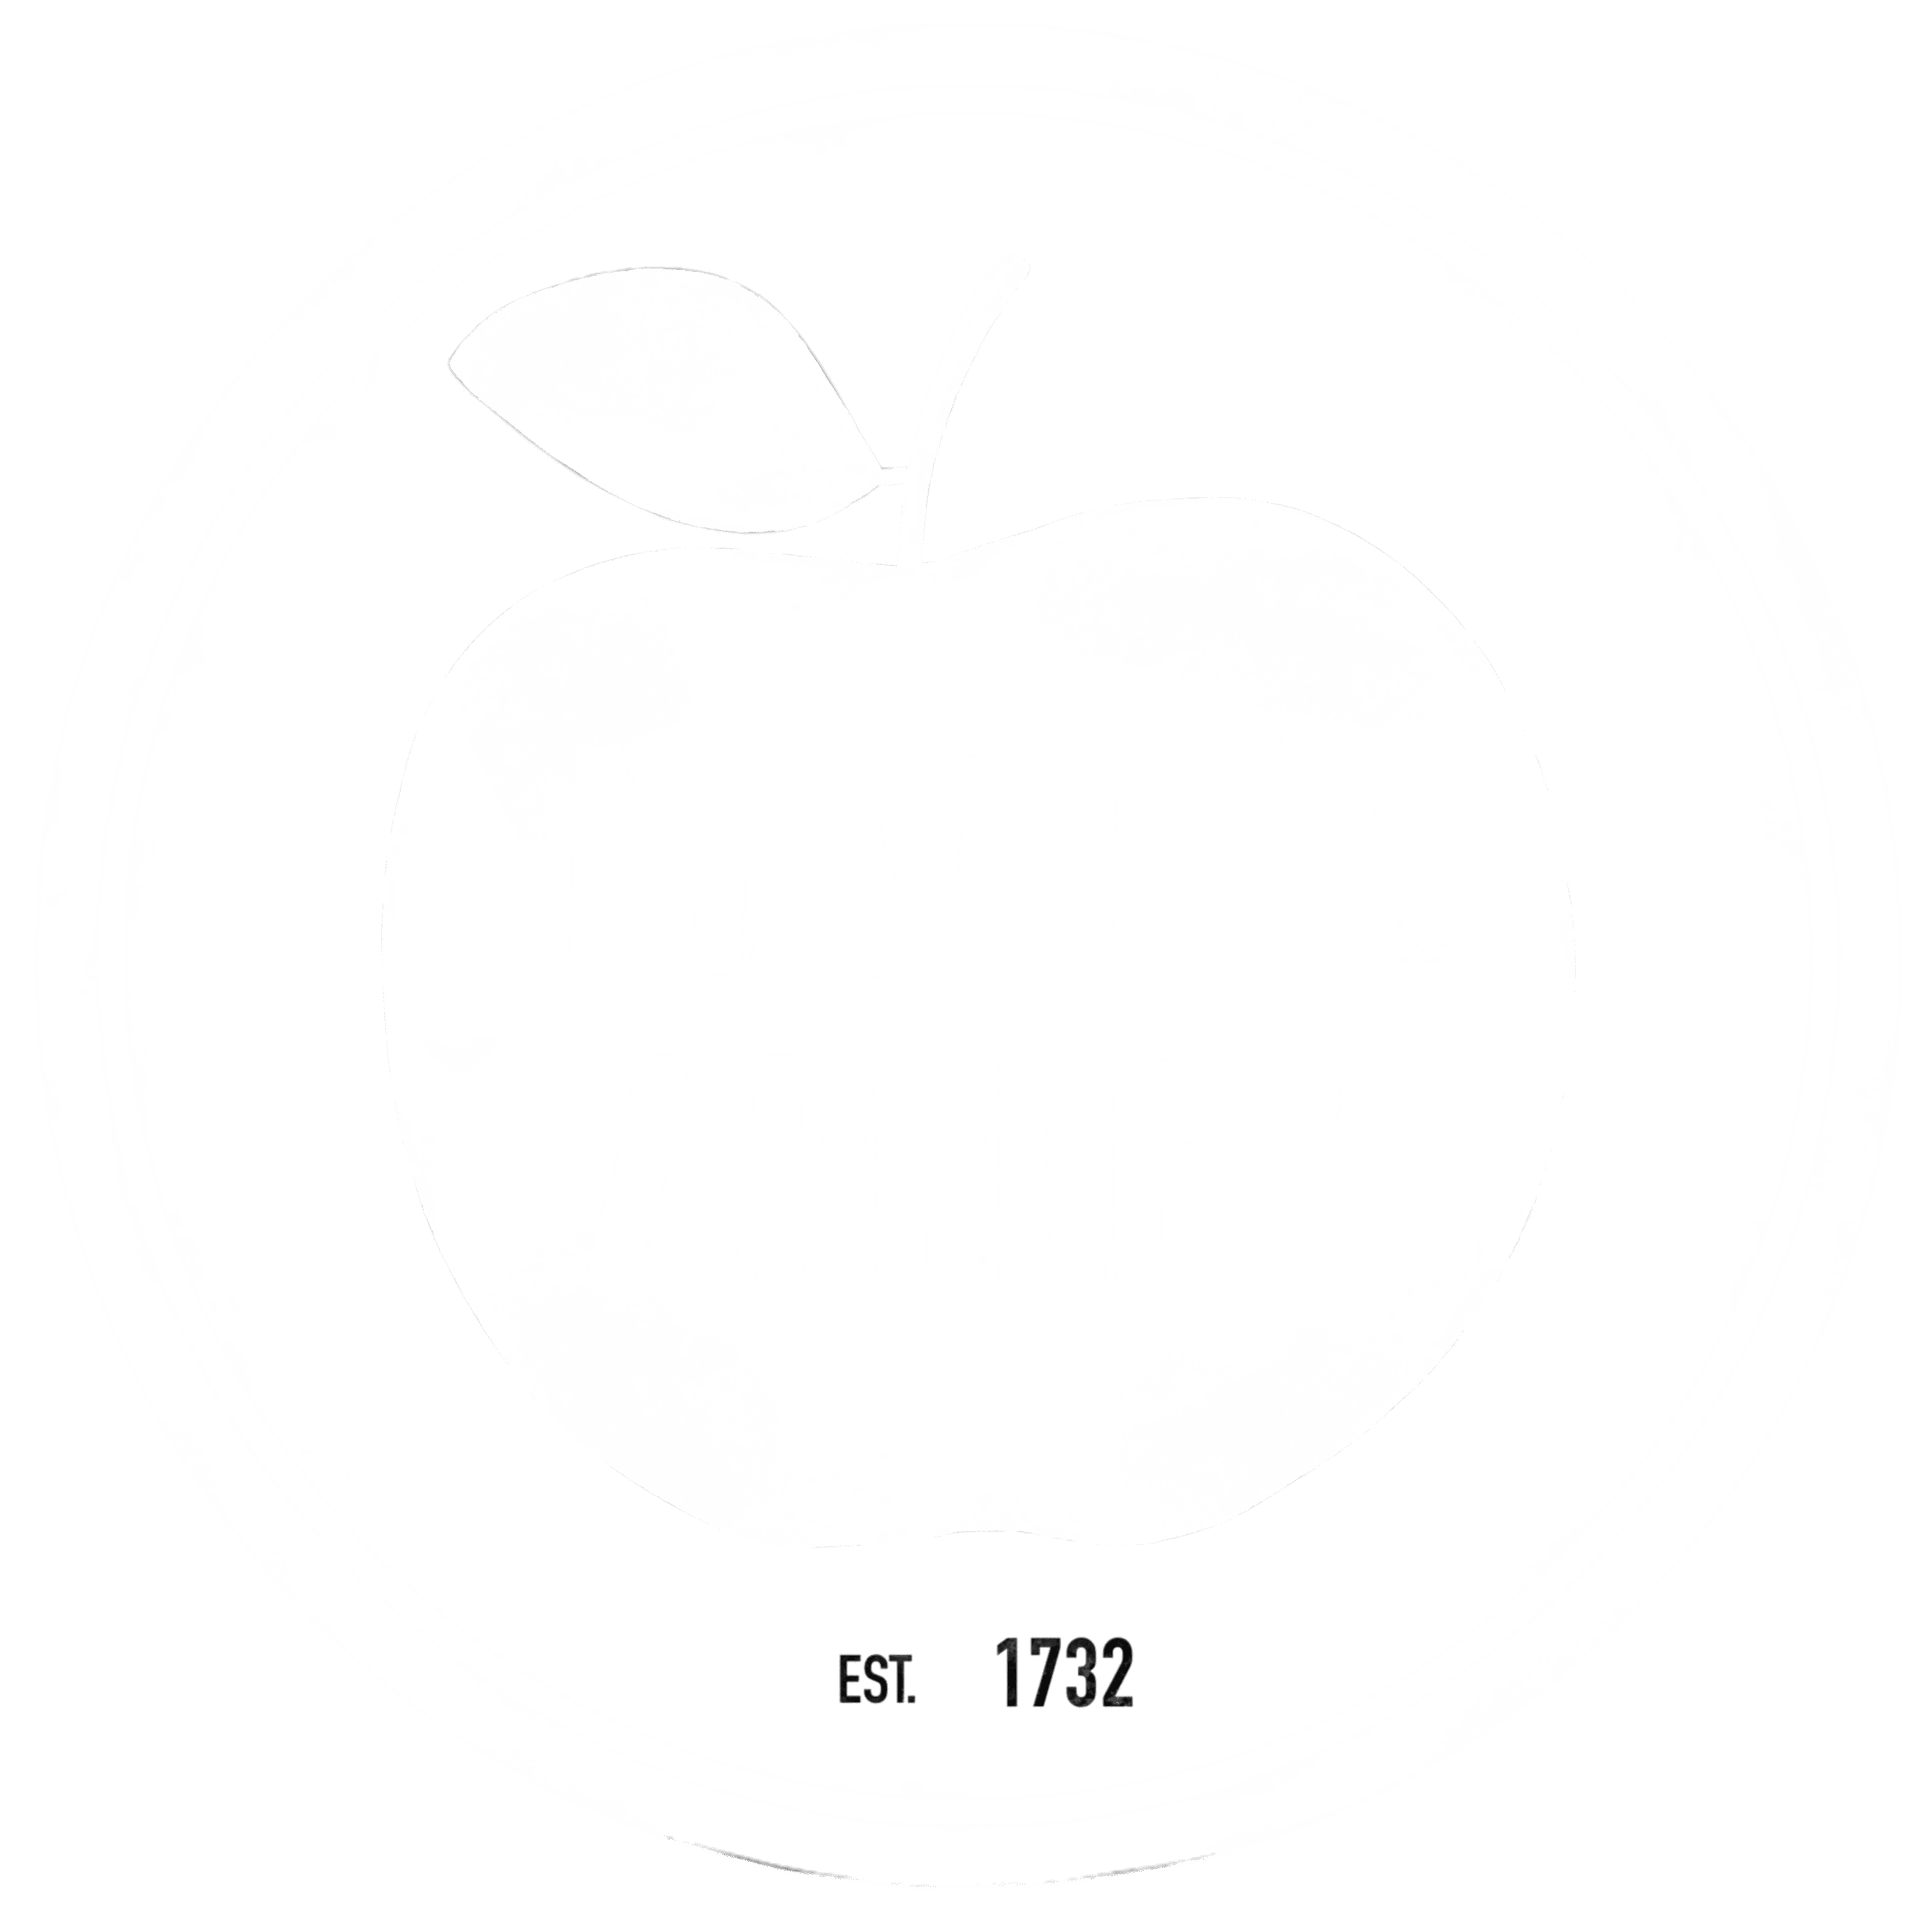  Mack's Apples